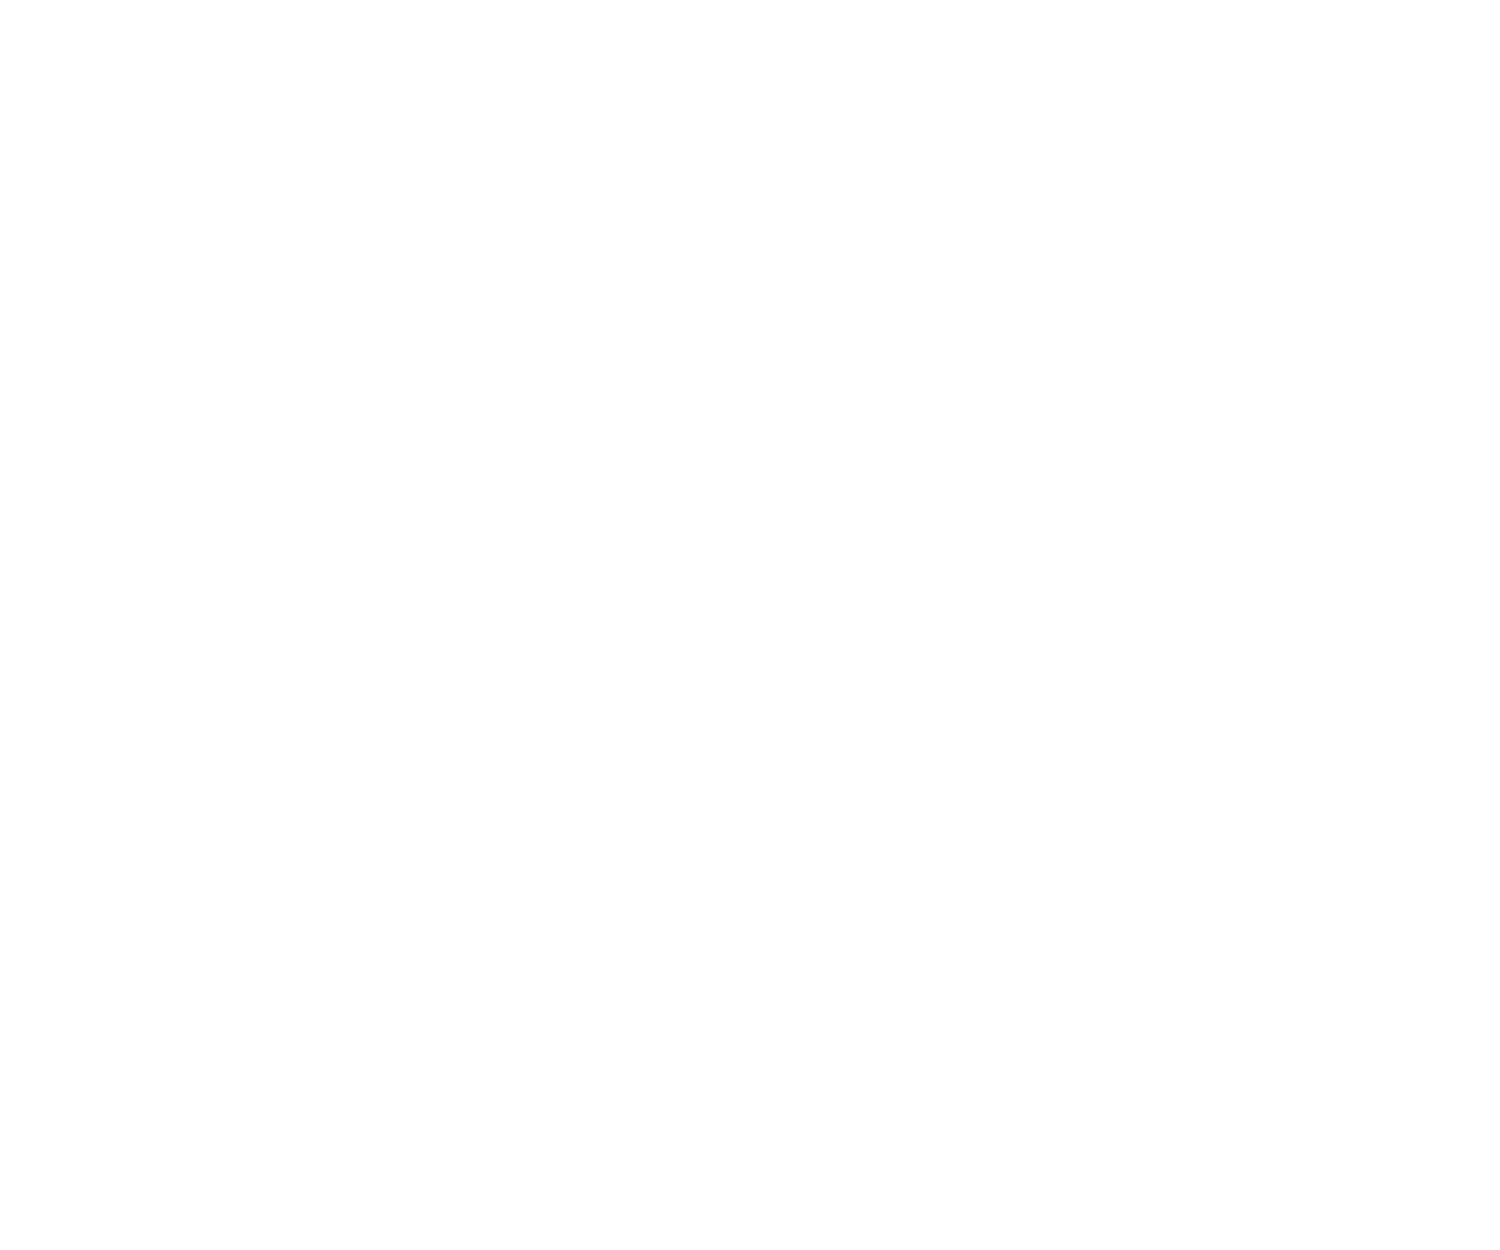 LOST Bus